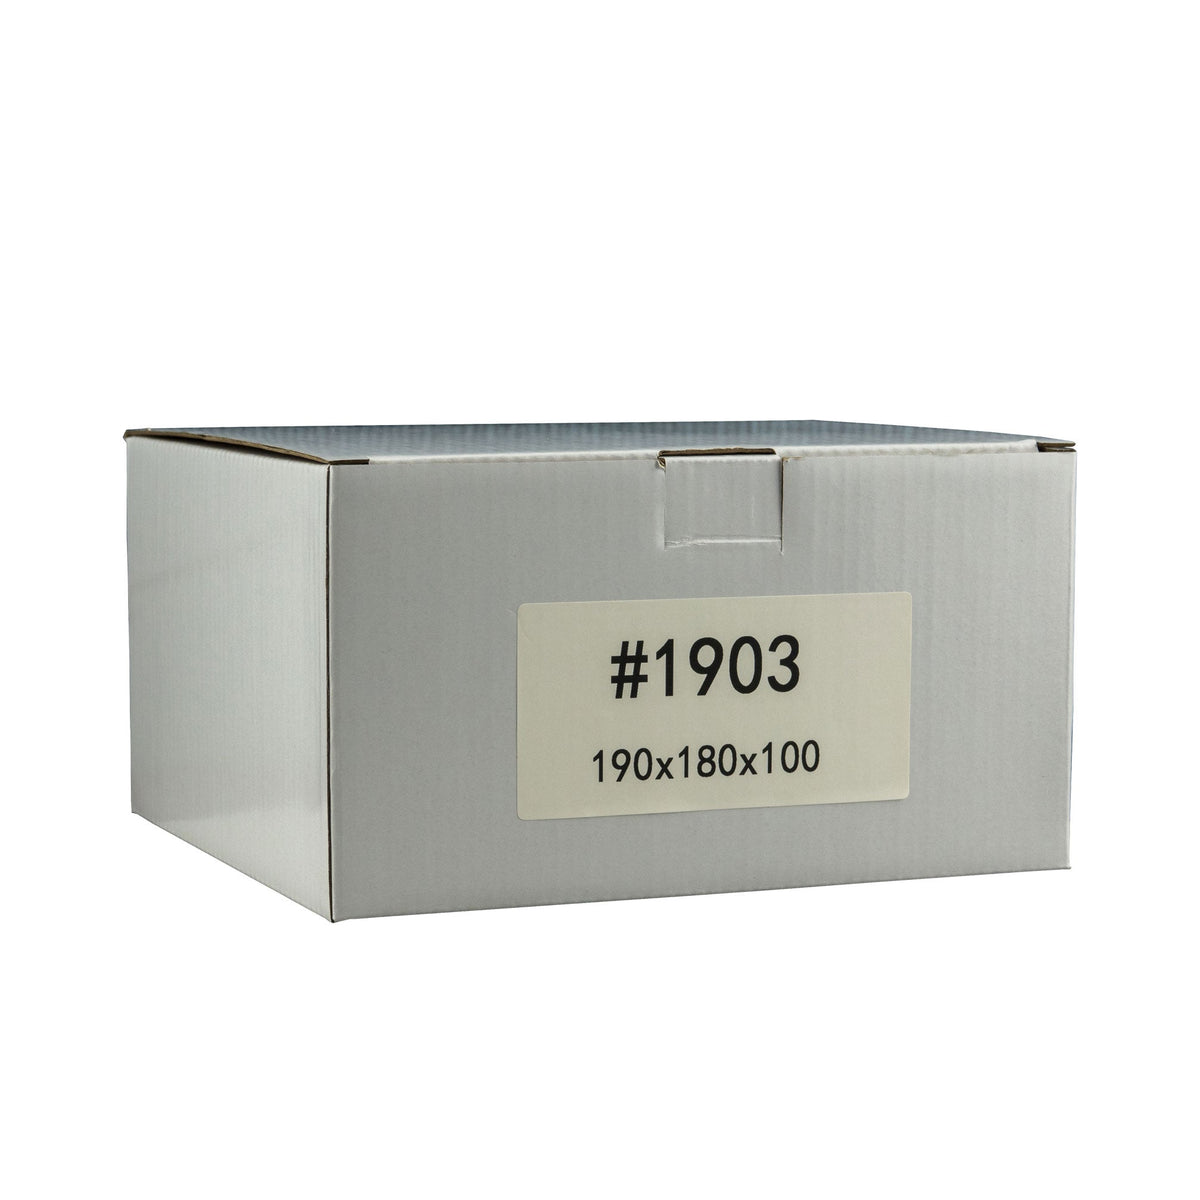 190mm x 180mm x 100mm White Carton Cardboard Shipping Box (#1903)